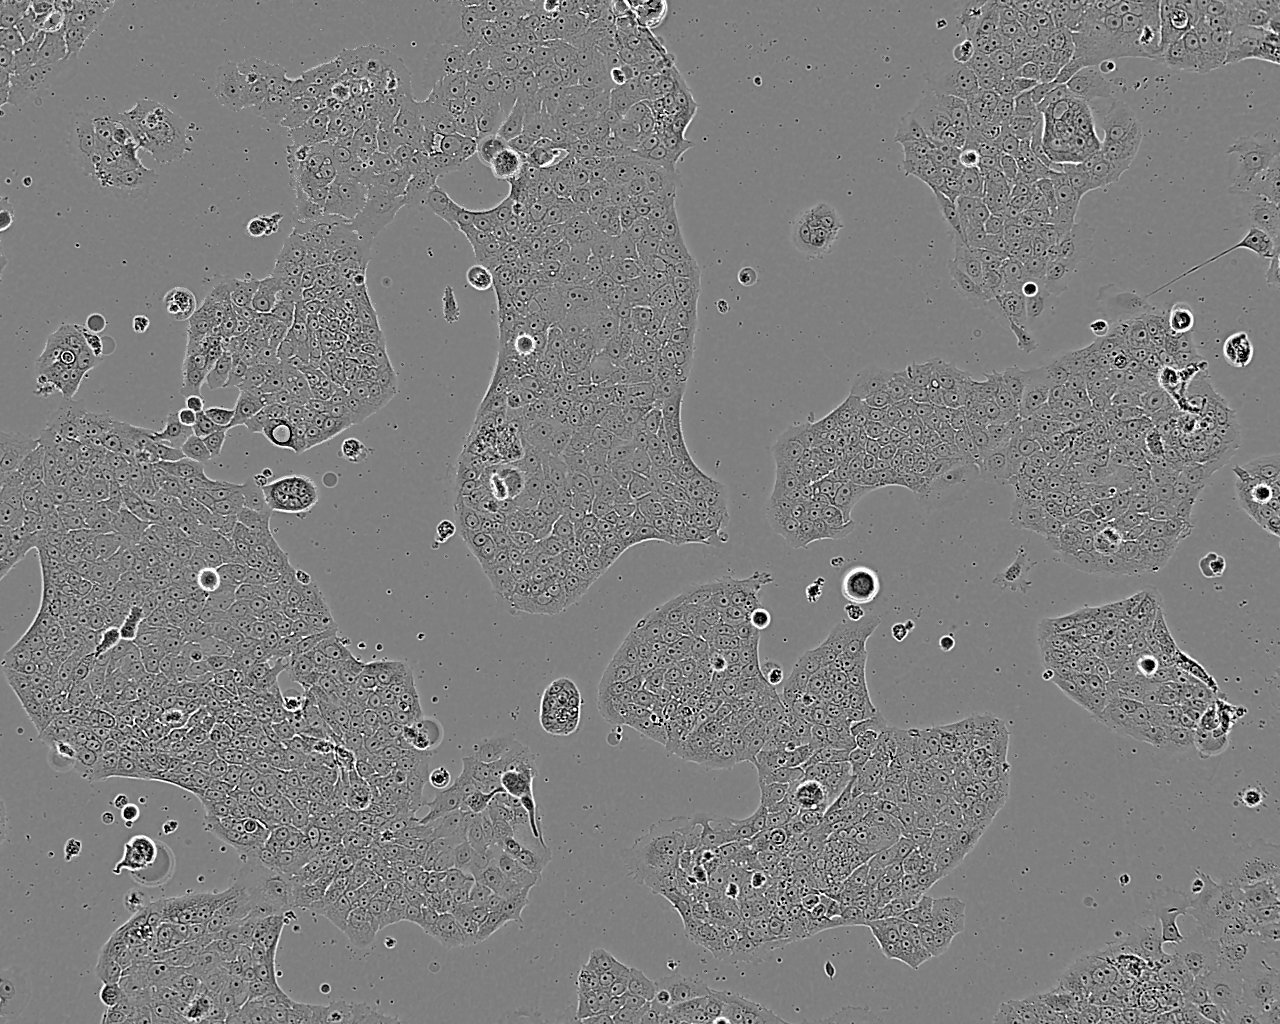 OE33 epithelioid cells人食管腺癌细胞系